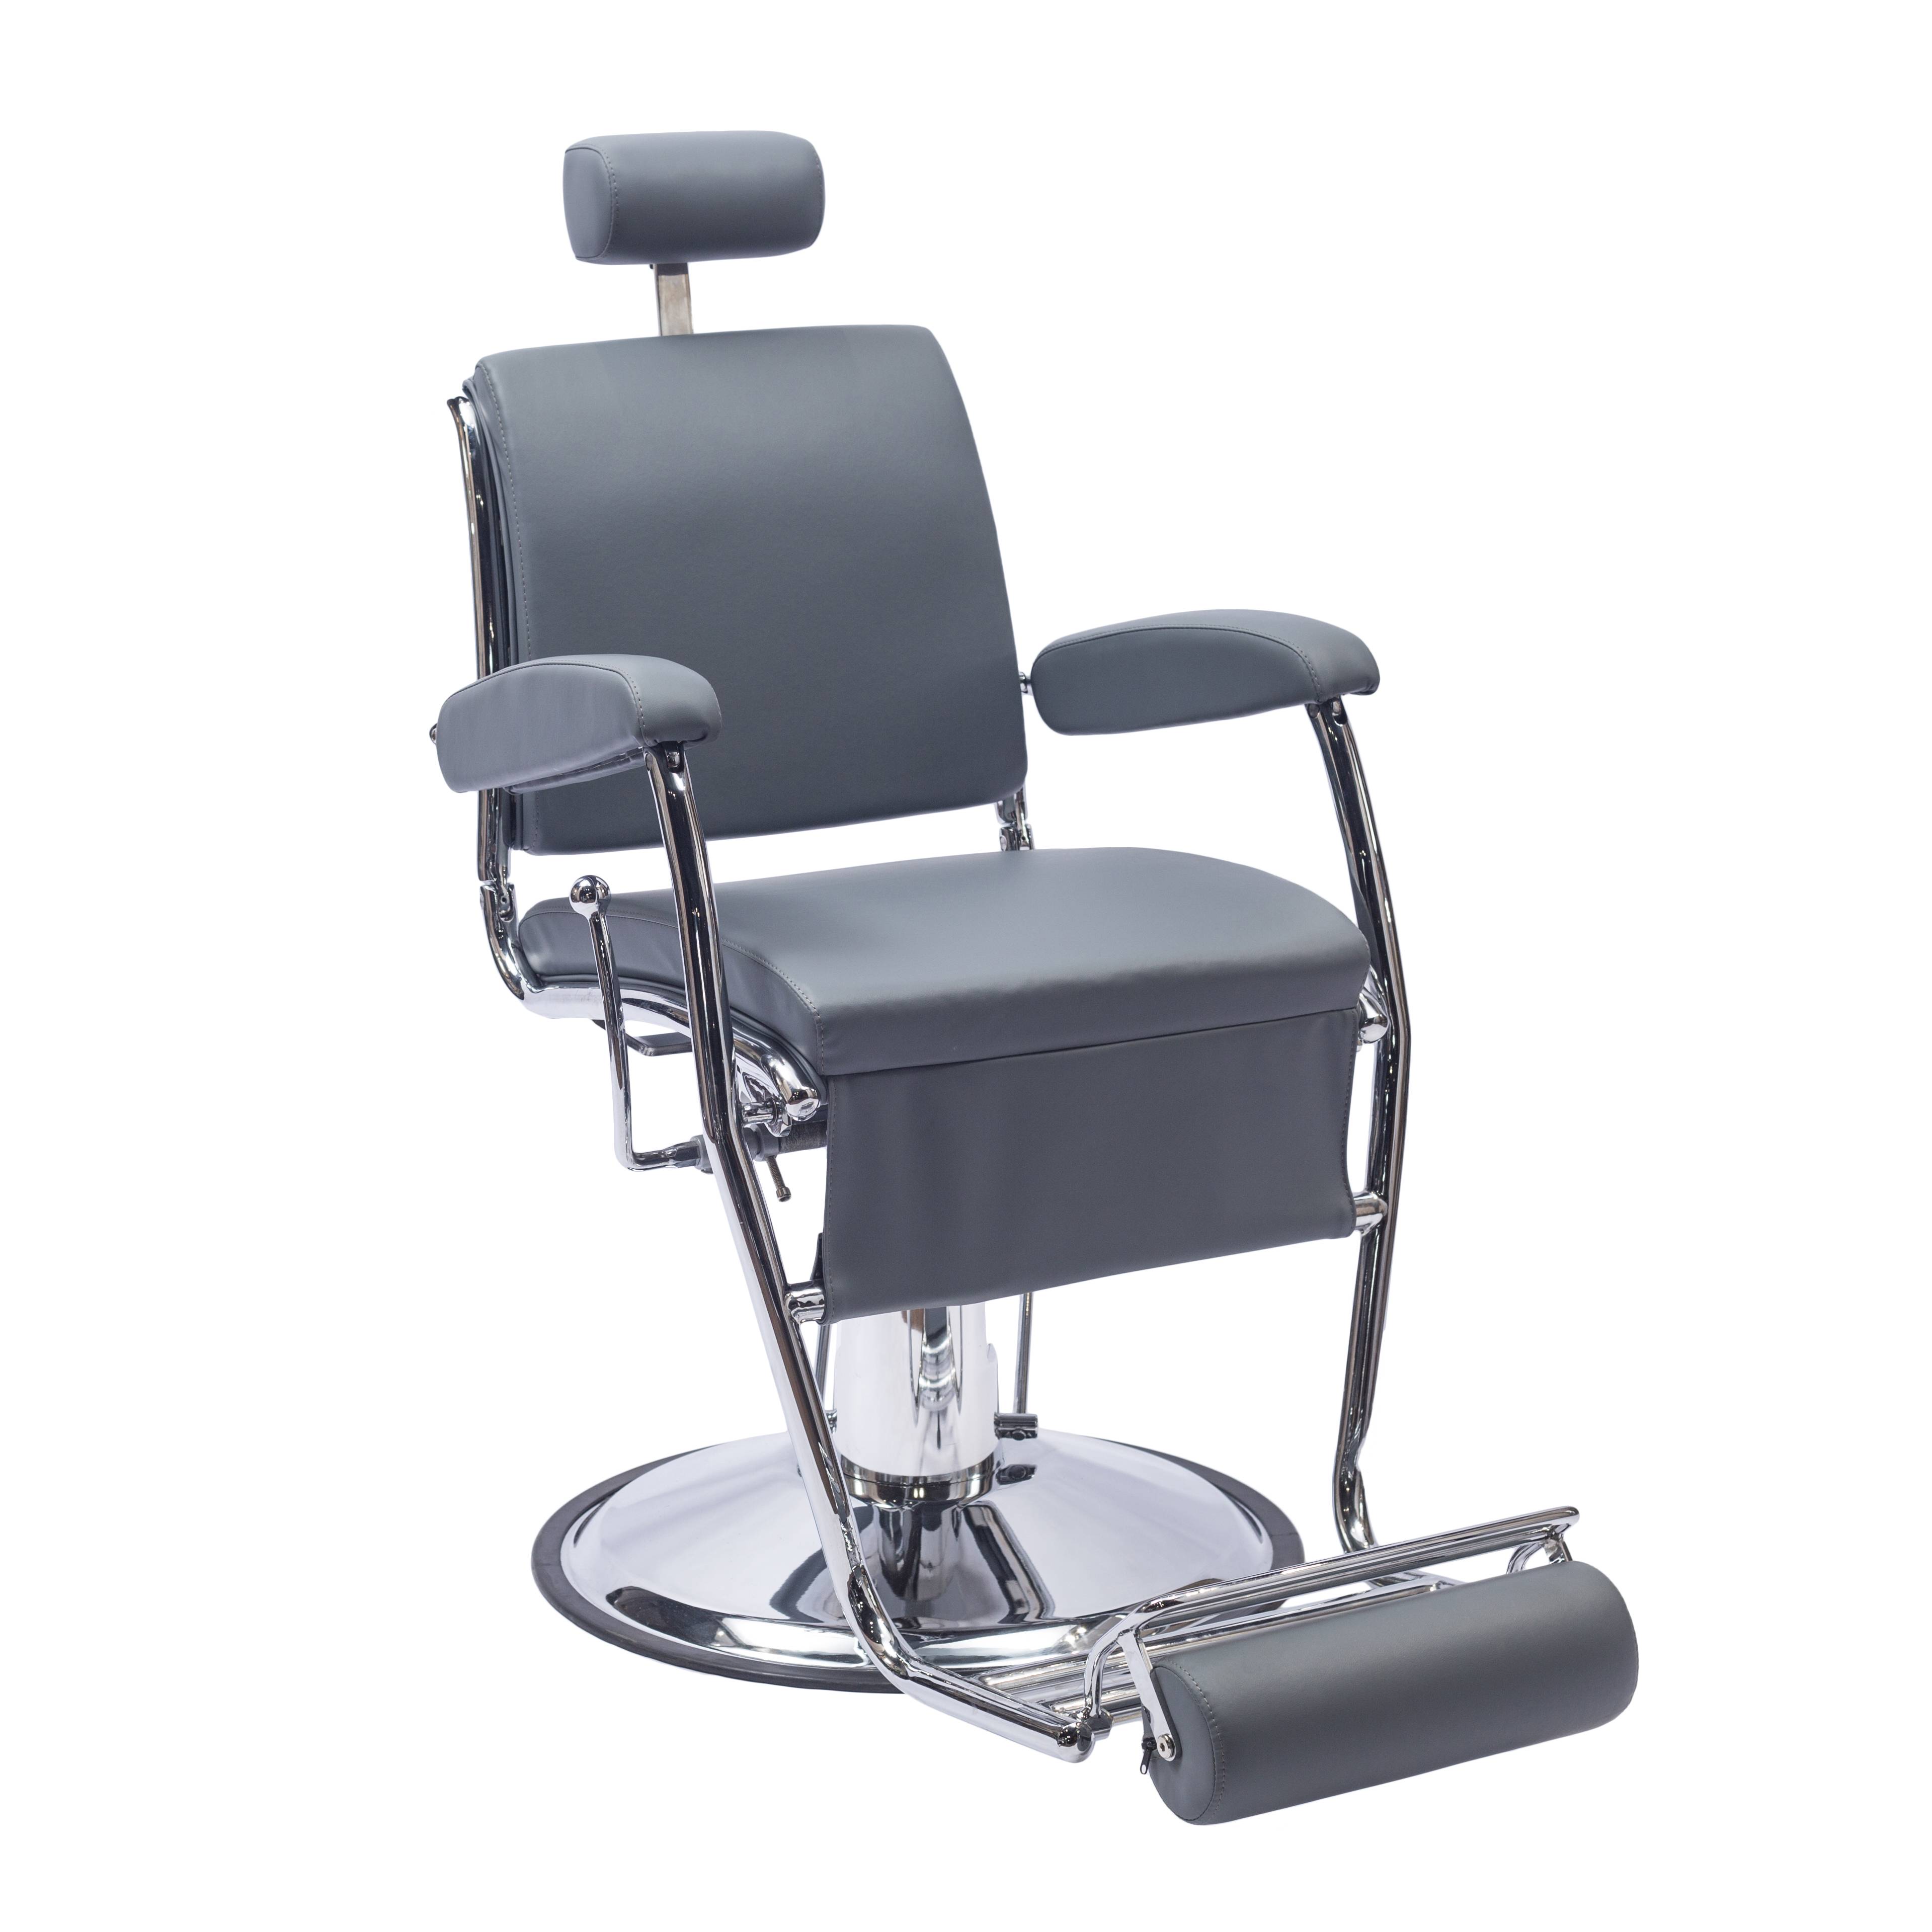 MingYi hydraulic recline hairdresser barber shop equipment chair styling beauty salon